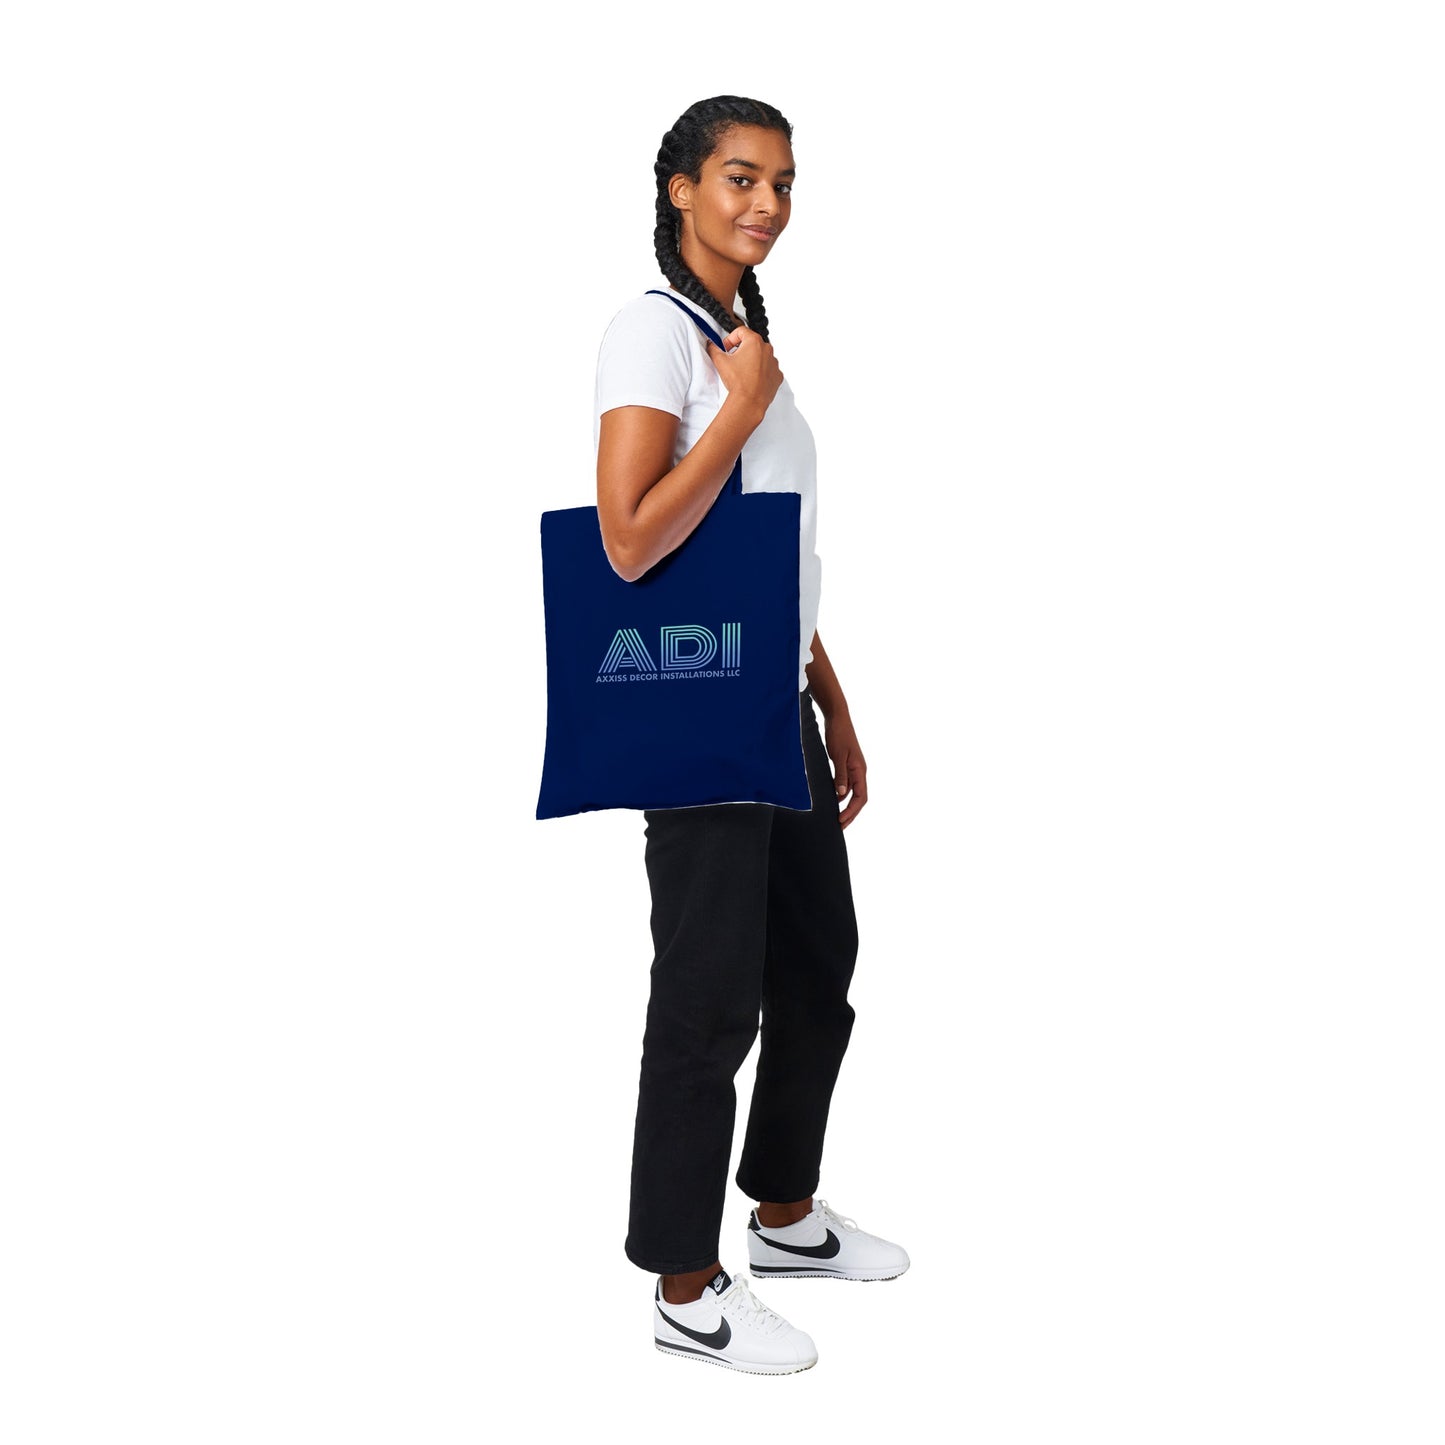 ADI-Axxis Decor Installations, LLC - Classic Tote Bag